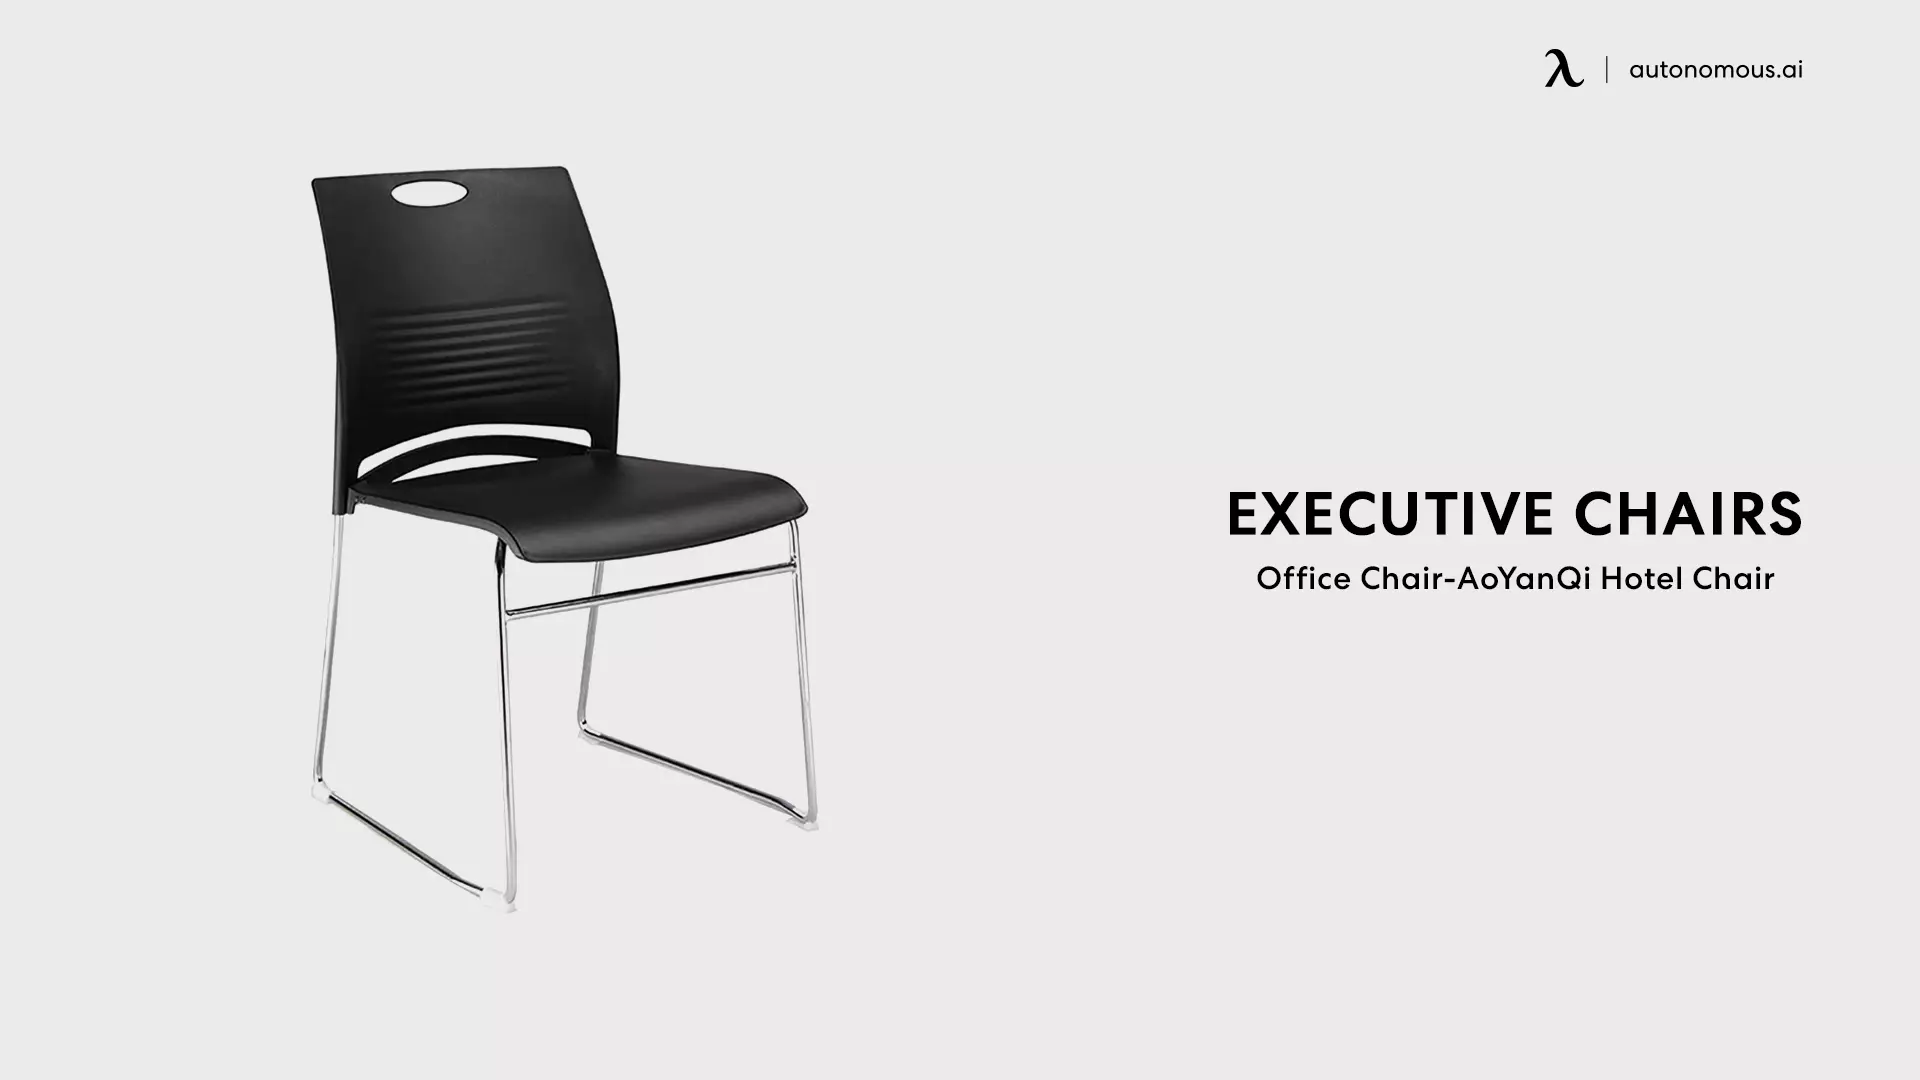 Office Chair-AoYanQi Hotel Chair - ergonomic chairs no wheels